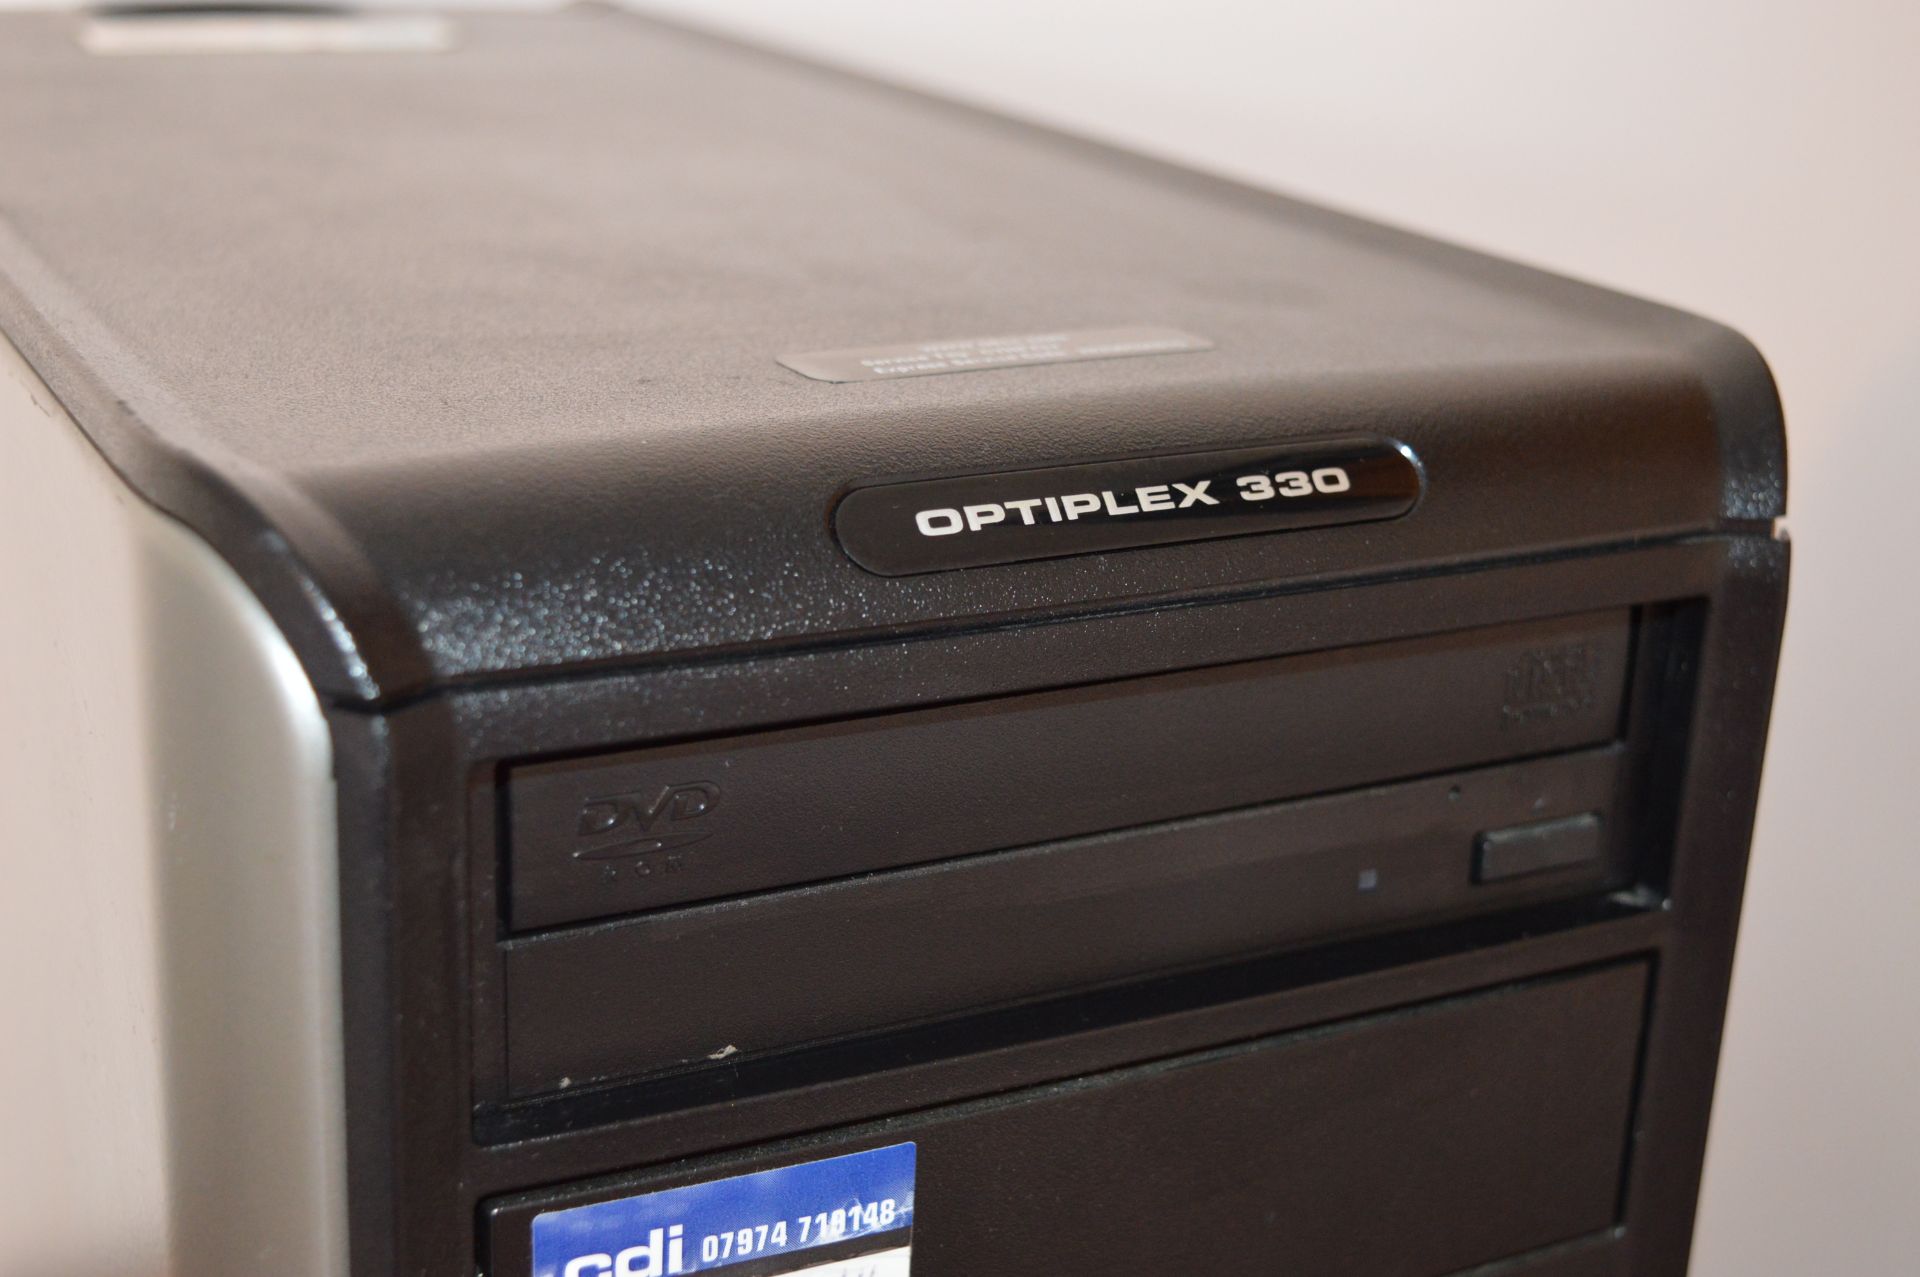 1 x Dell Optiplex 330 Desktop Computer - Features Intel 2.0ghz Dual Core Processor, 2gb Ram and - Image 3 of 3